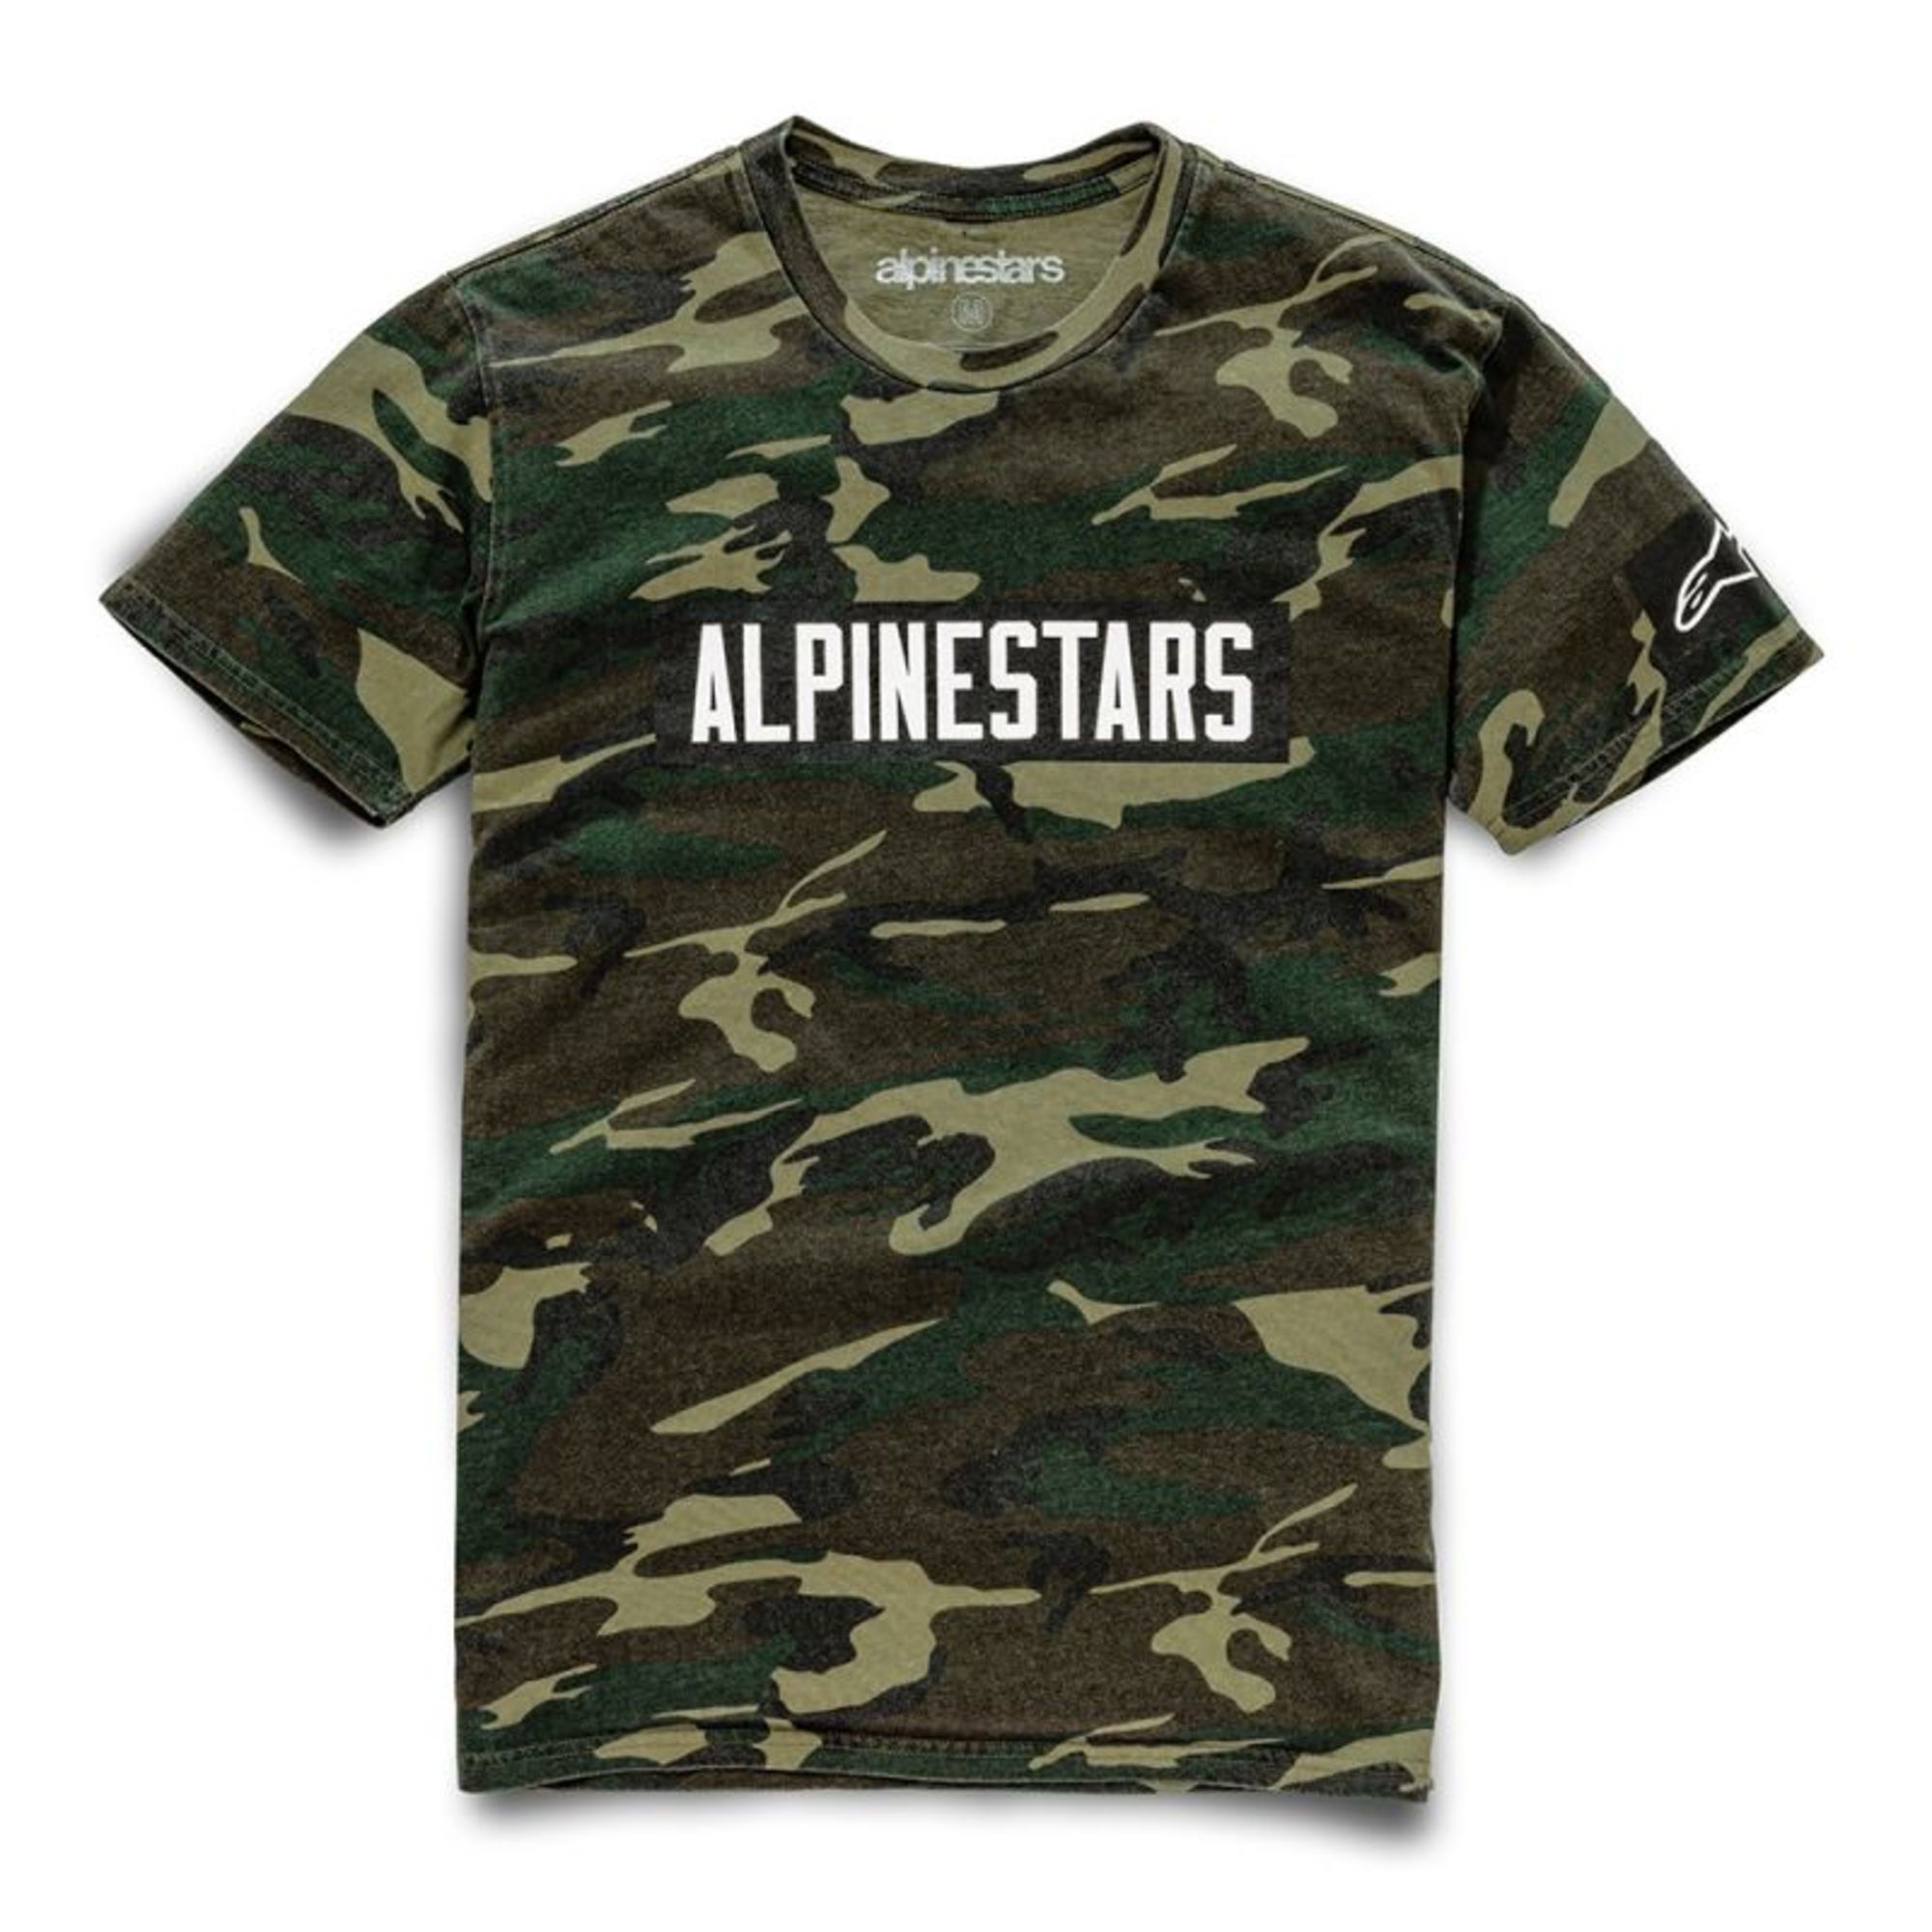 alpinestars t-shirt shirts for men adventure premium